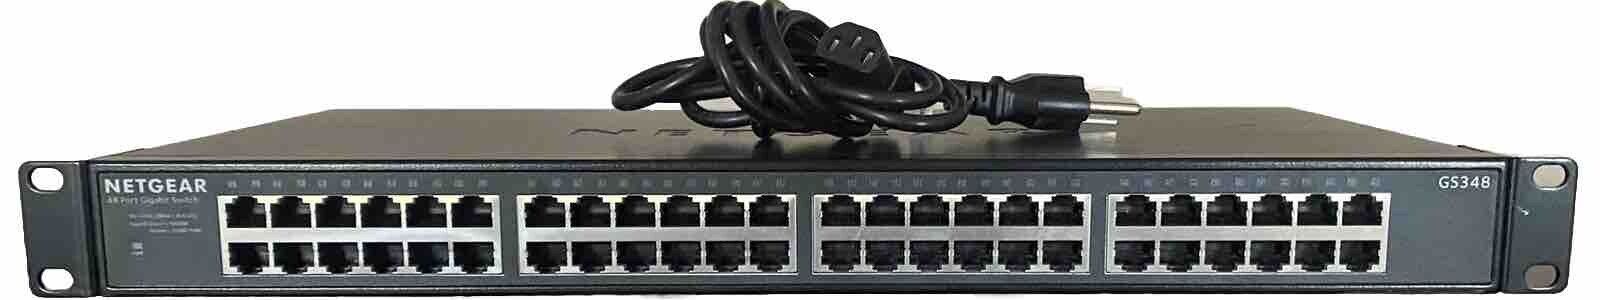 Netgear GS348 48-Port Gigabit Ethernet Unmanaged Switch - Desktop or Rackmount